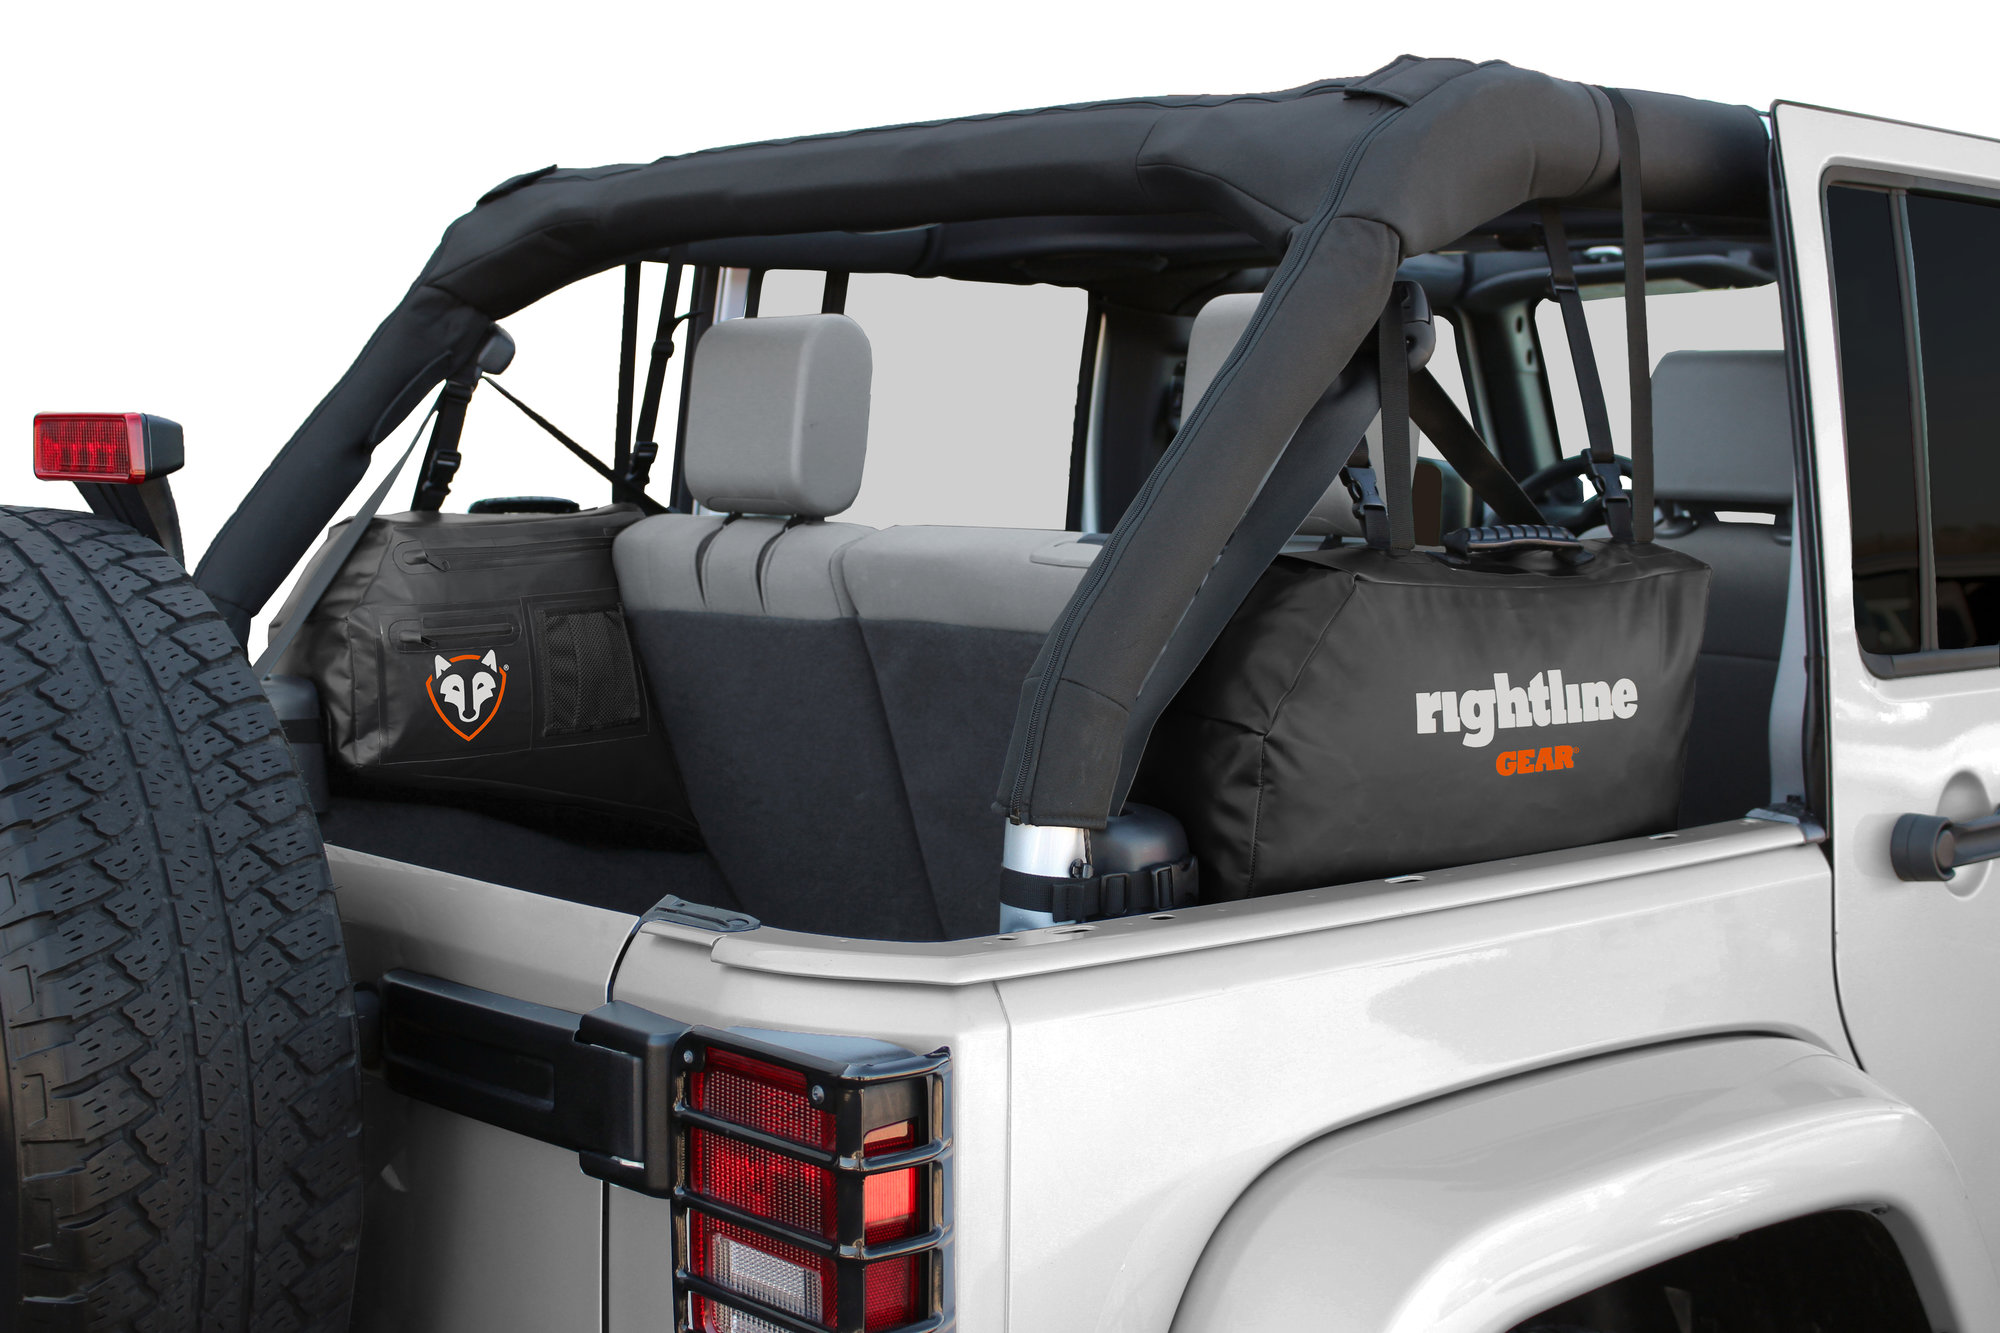 Rightline Gear 4x4 Side Storage Bags for 07-18 Jeep Wrangler Unlimited JK 4  door | Quadratec